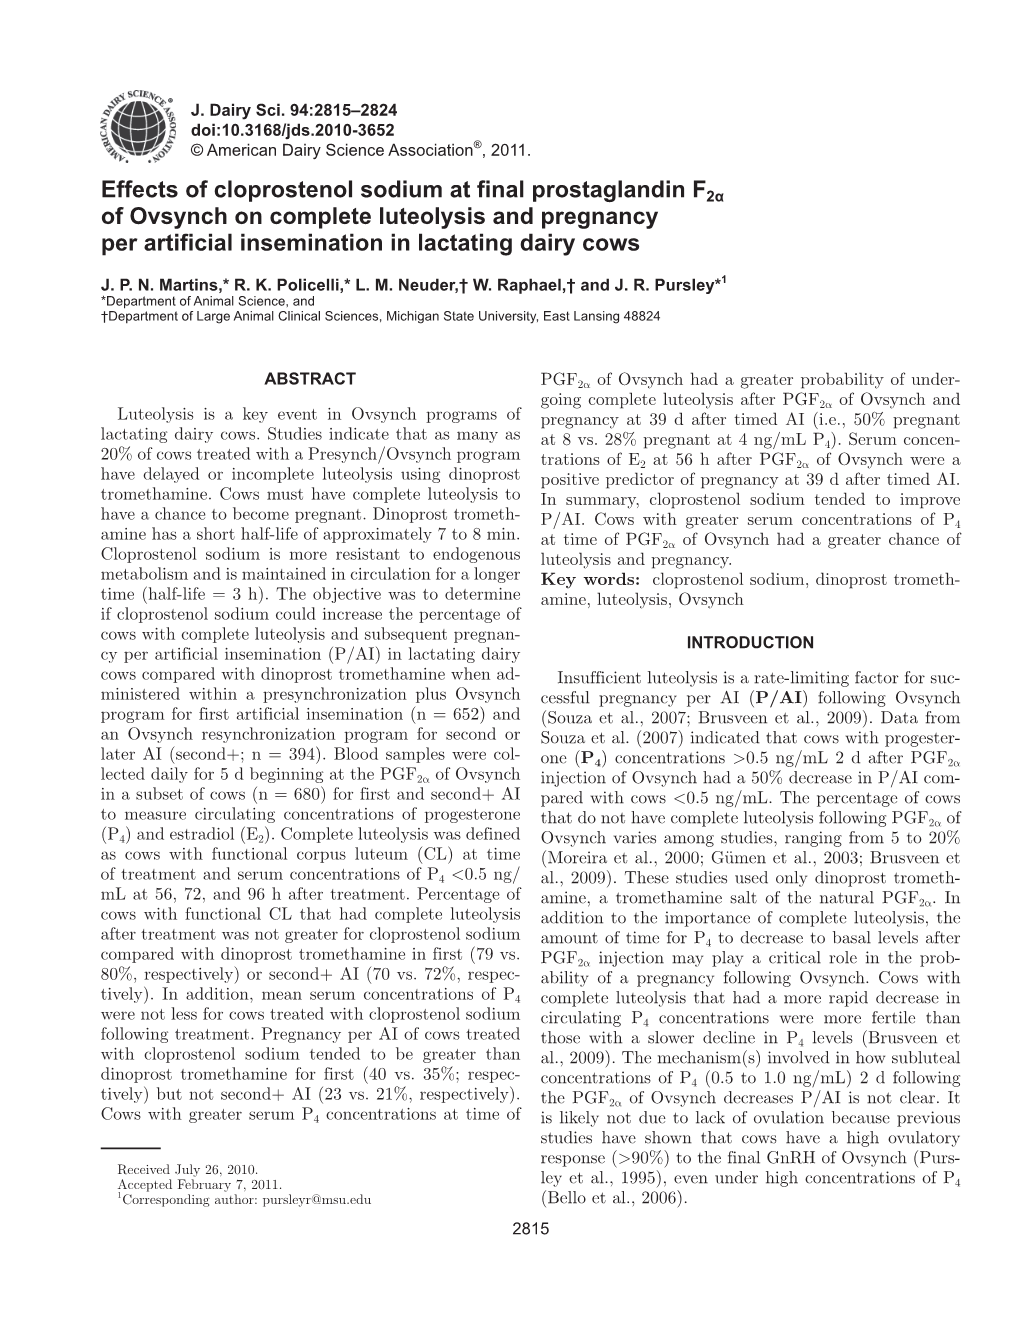 Effects of Cloprostenol Sodium at Final Prostaglandin F2a of Ovsynch On